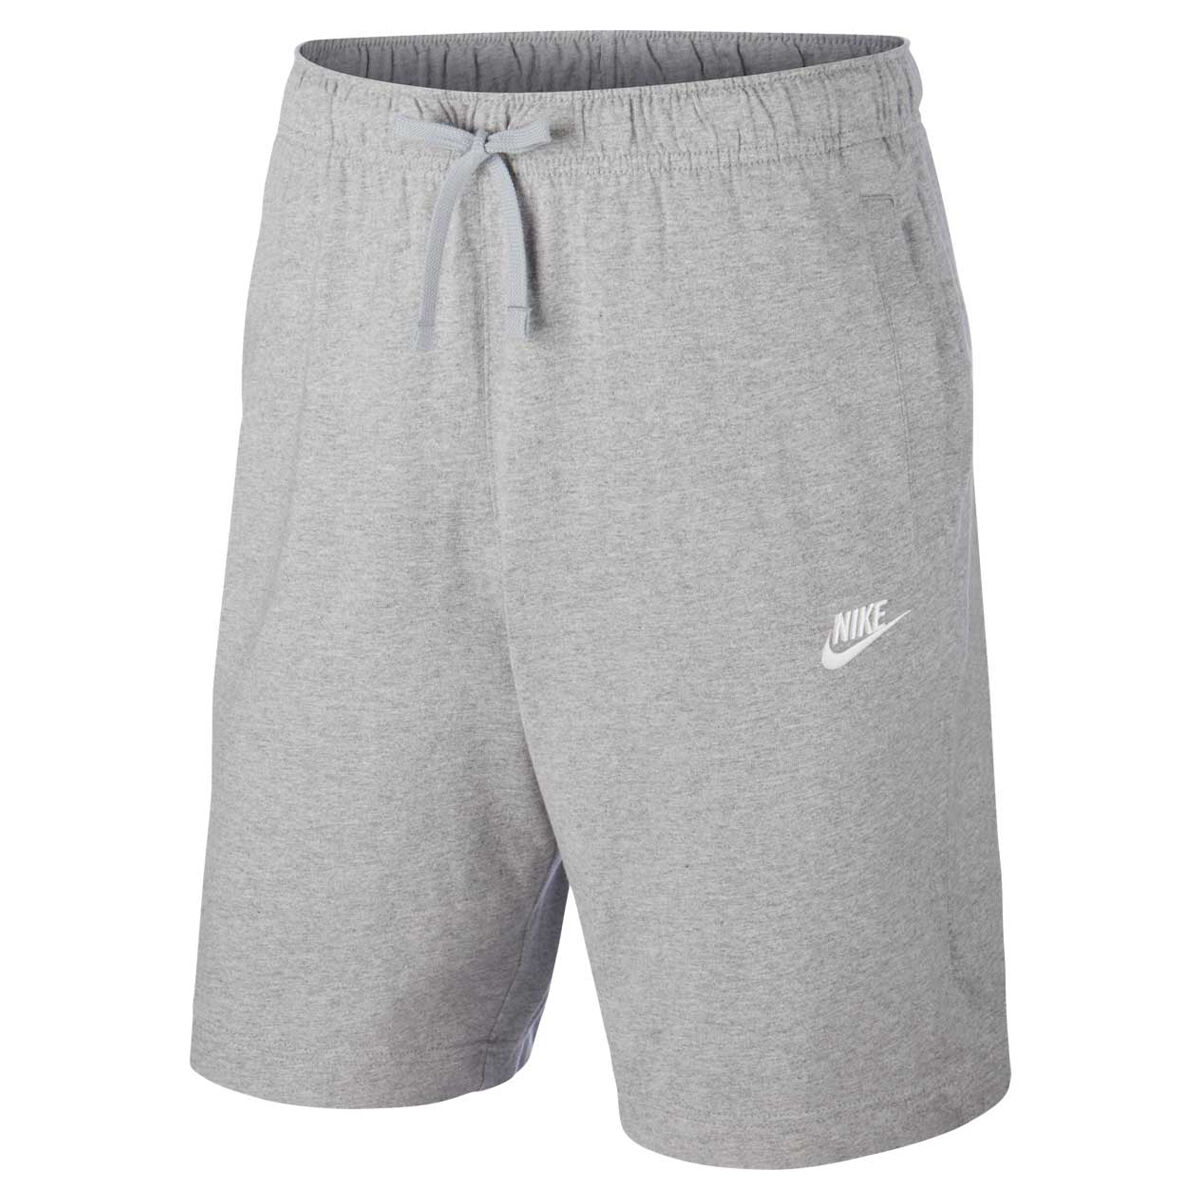 nike jersey shorts grey